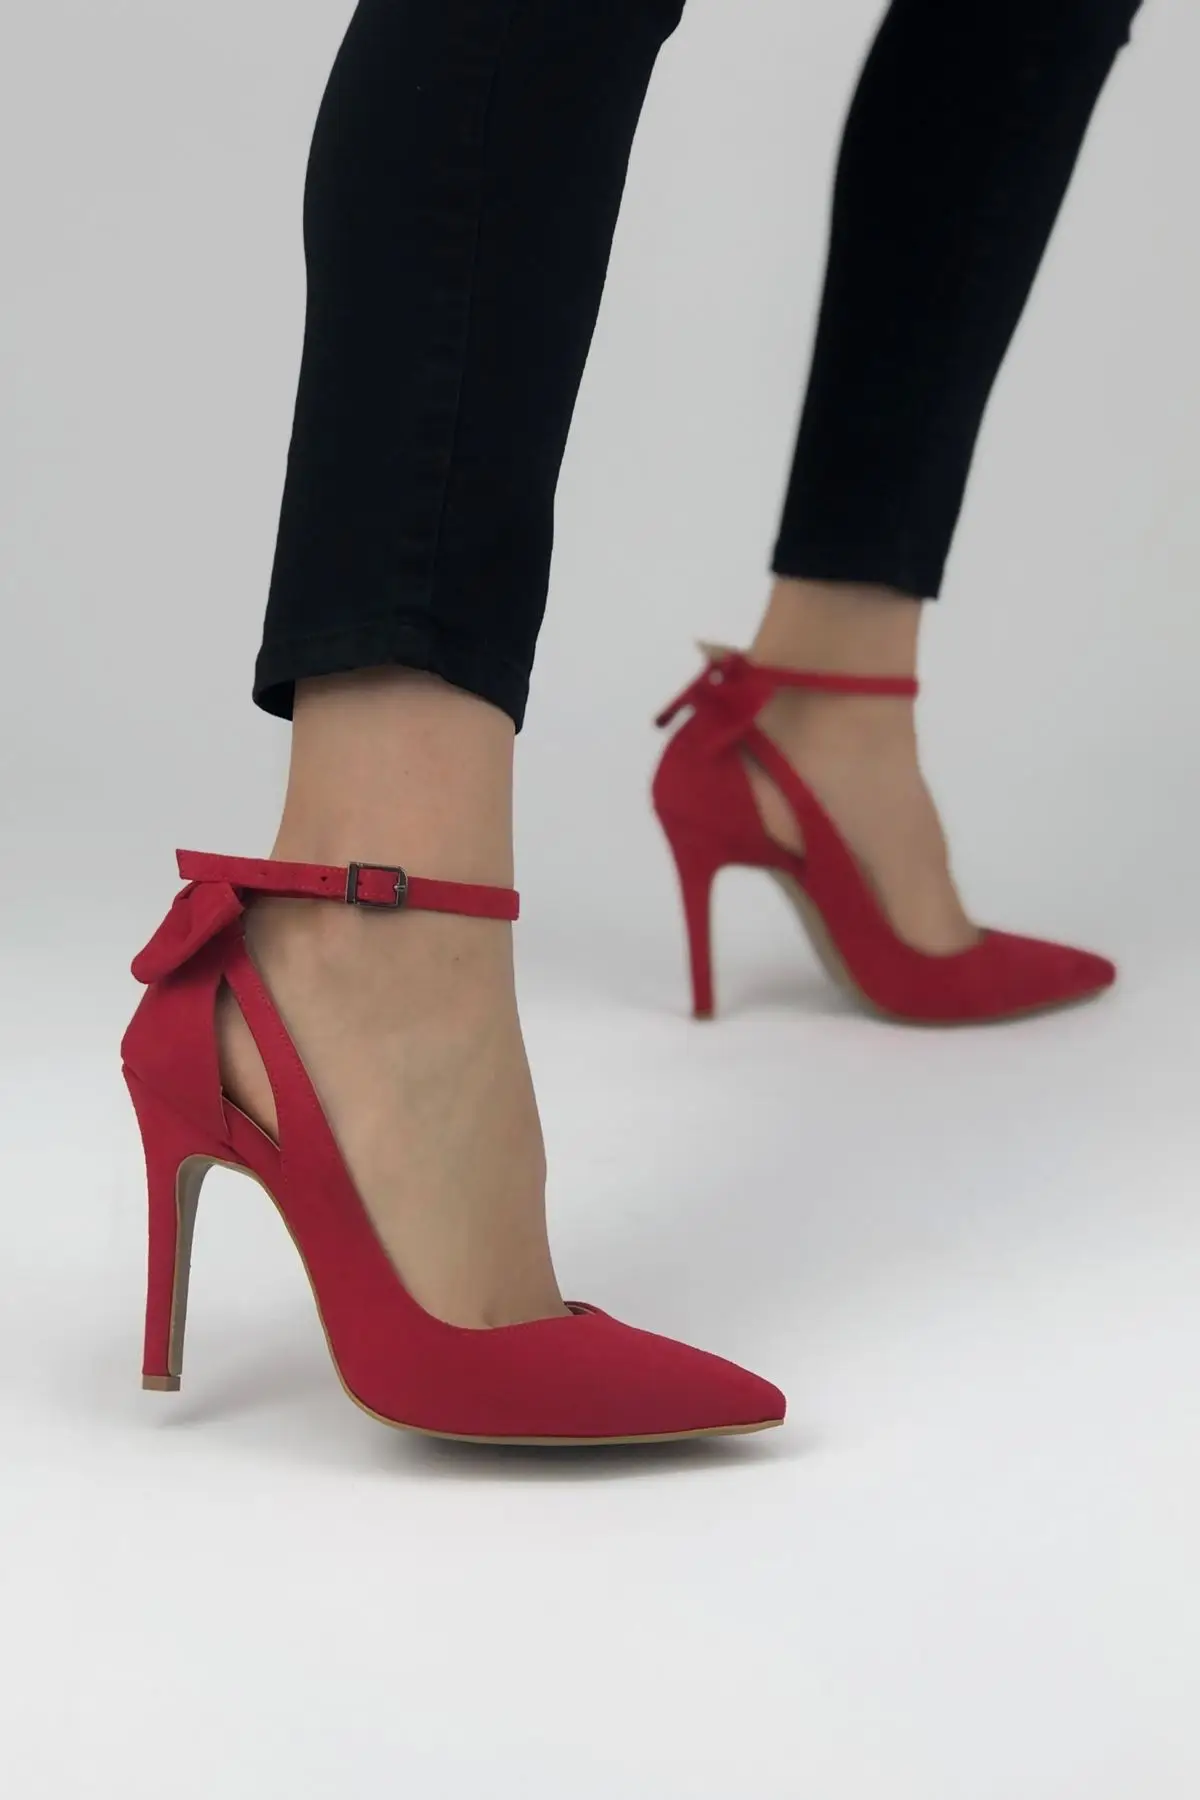 

Luther Papyonlu 3 Different Color Suede Women Shoes new season Design women high heels women stiletto